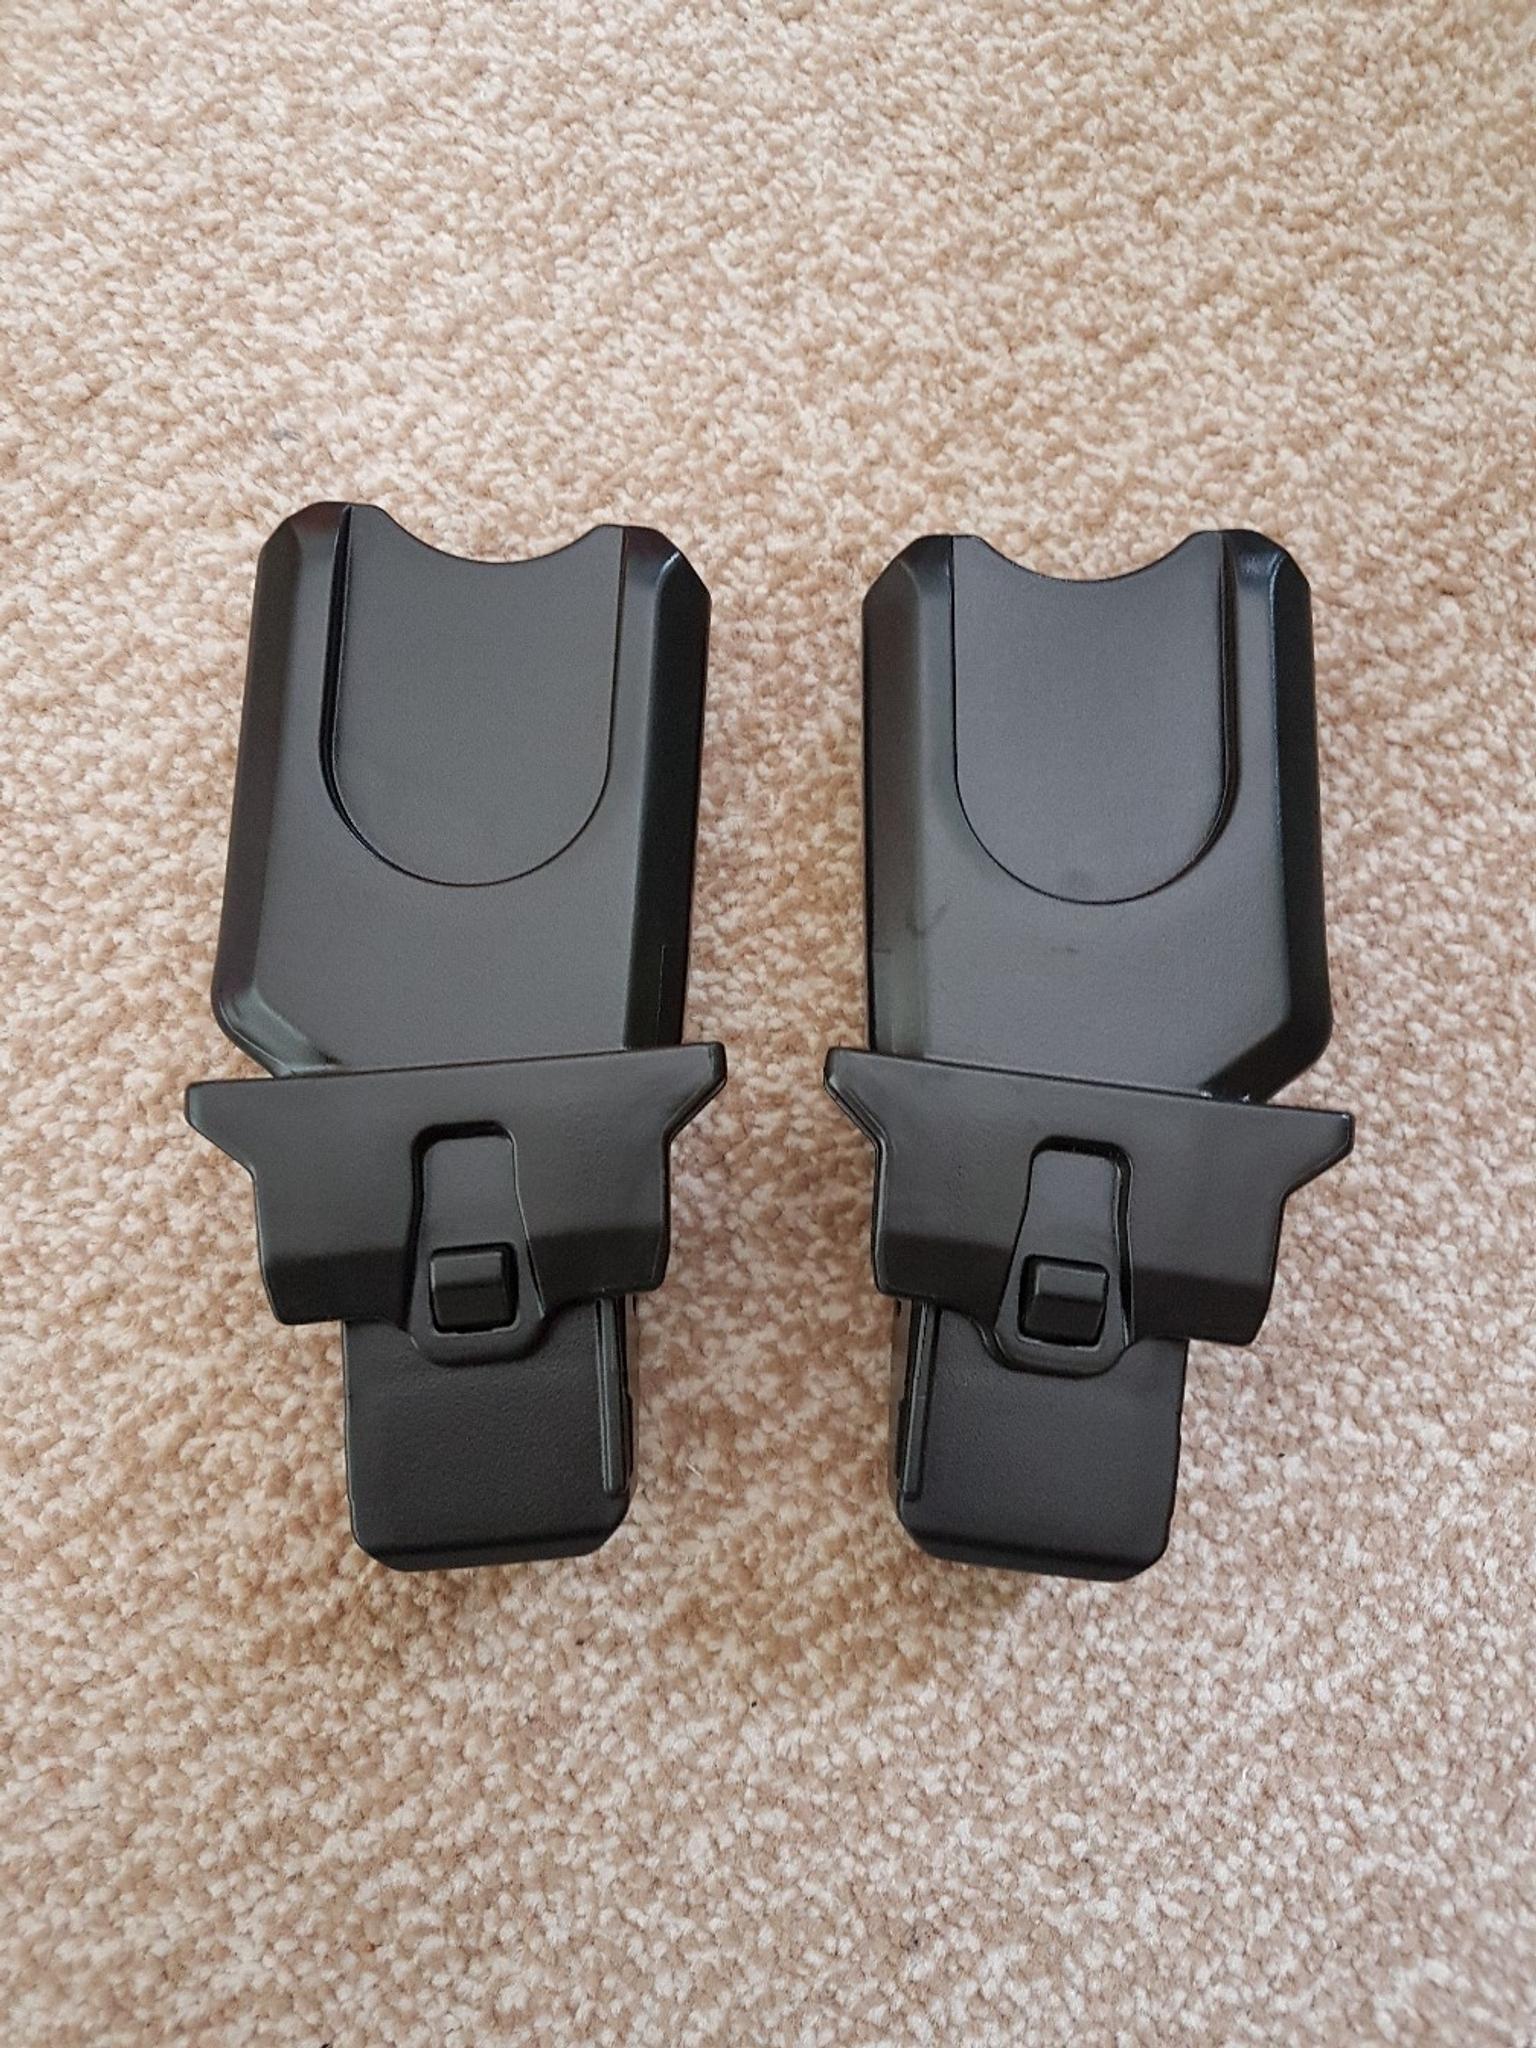 joie chrome car seat adaptors